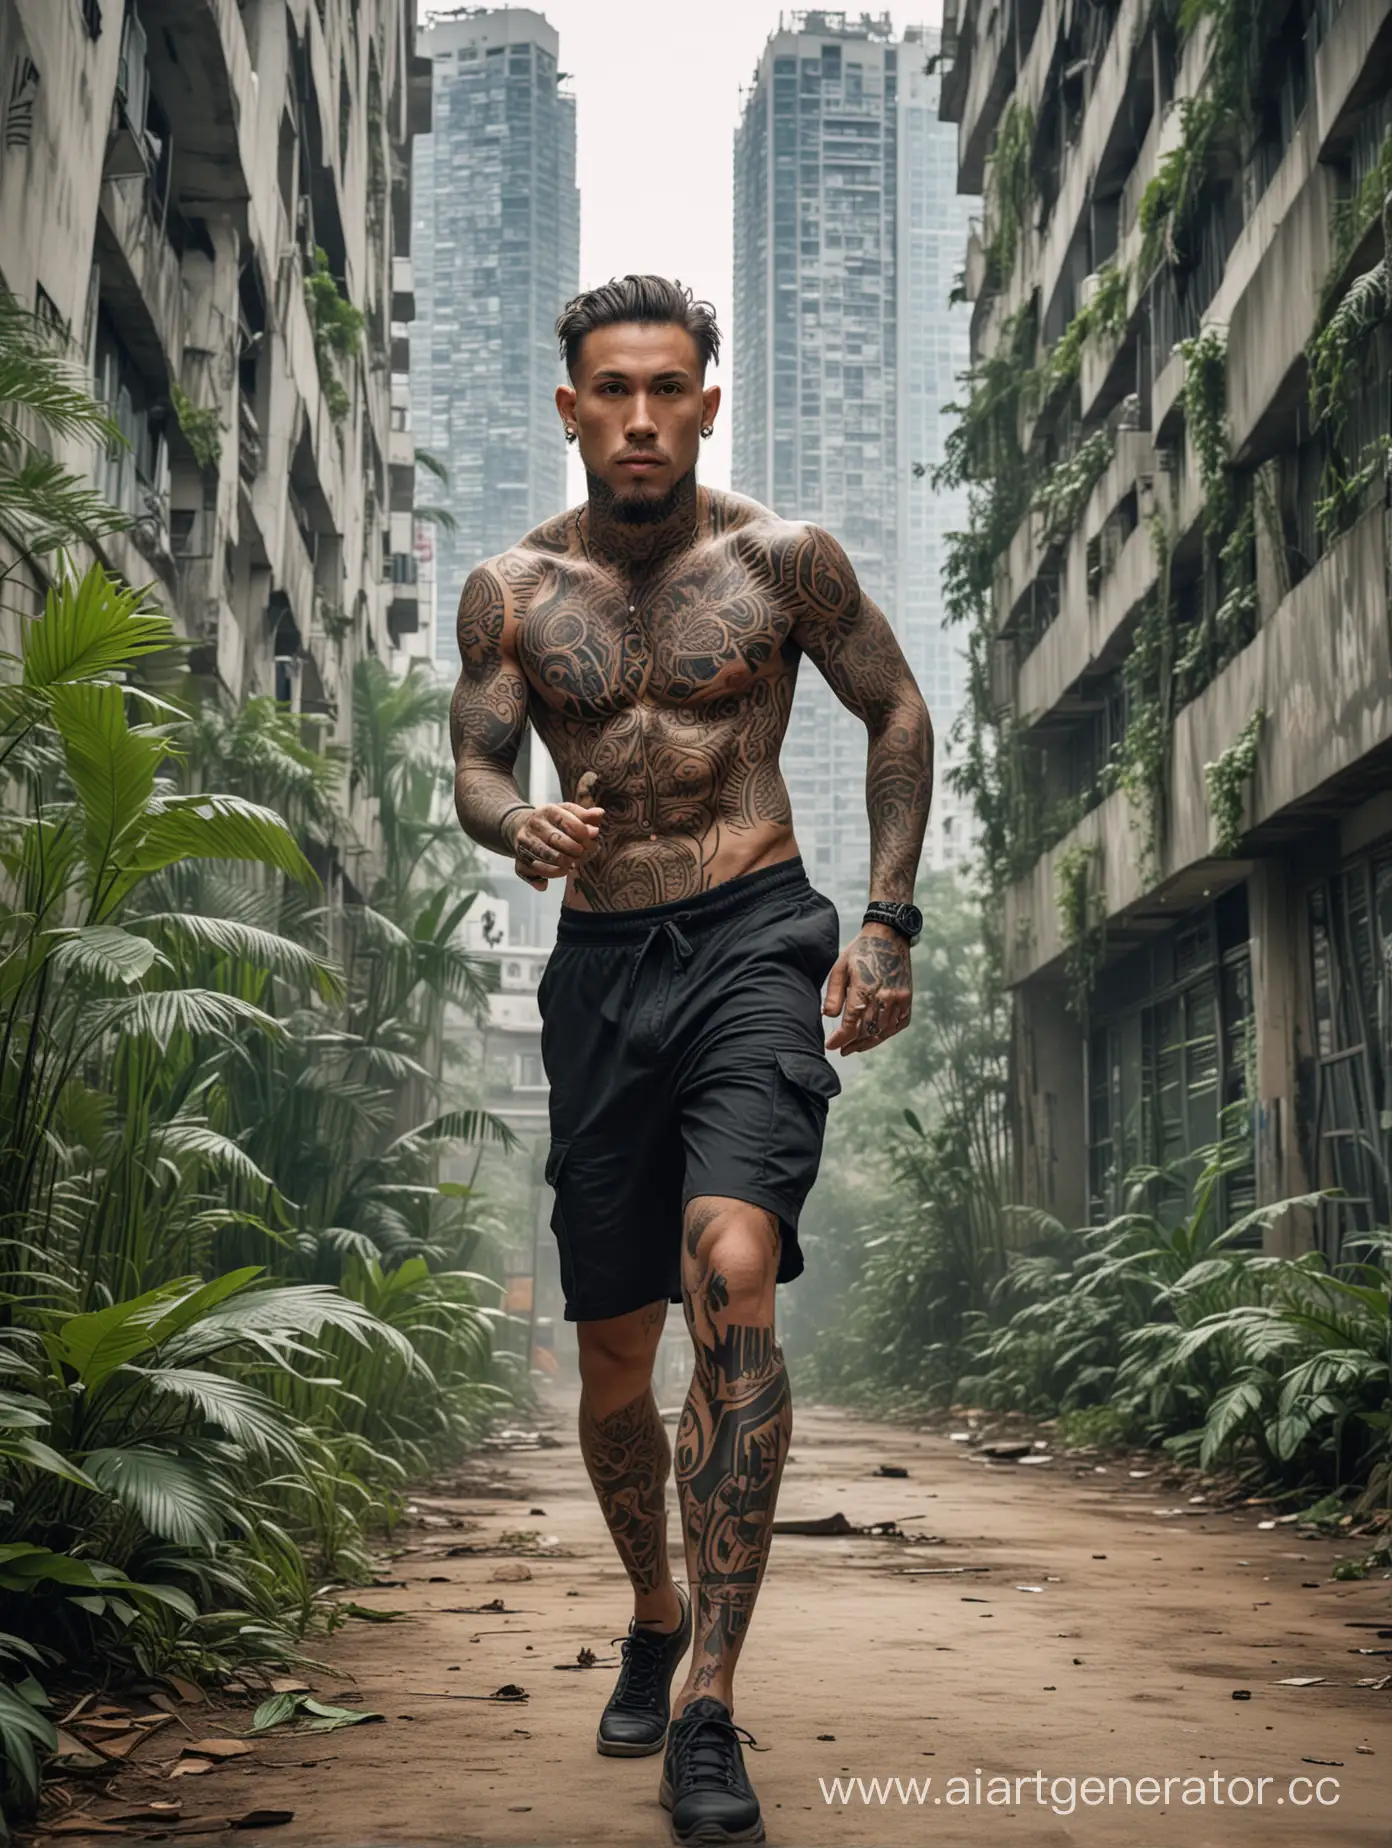 tattoo artist runs through the jungle, against the backdrop of a high-rise building
